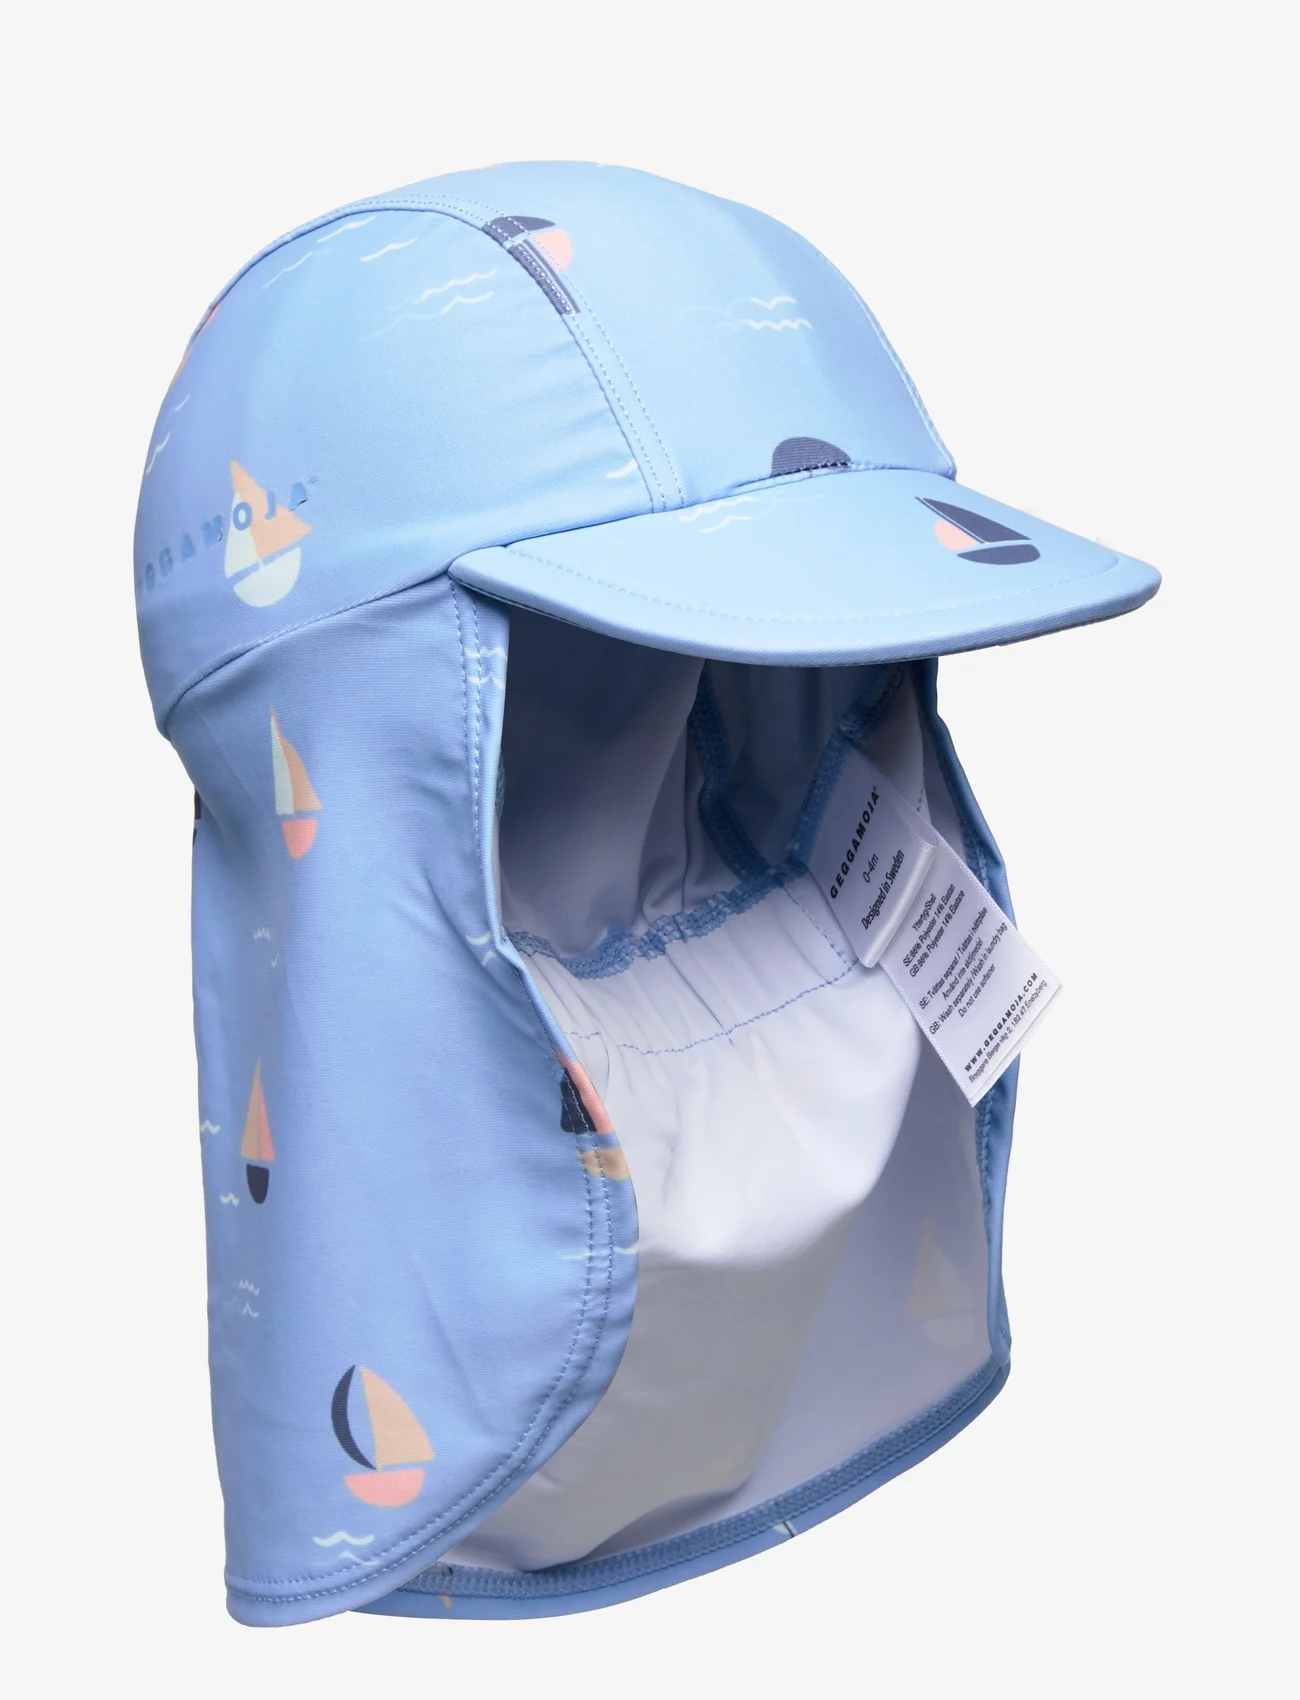 Geggamoja - UV-Hat - solhatter - light blue sailor - 0